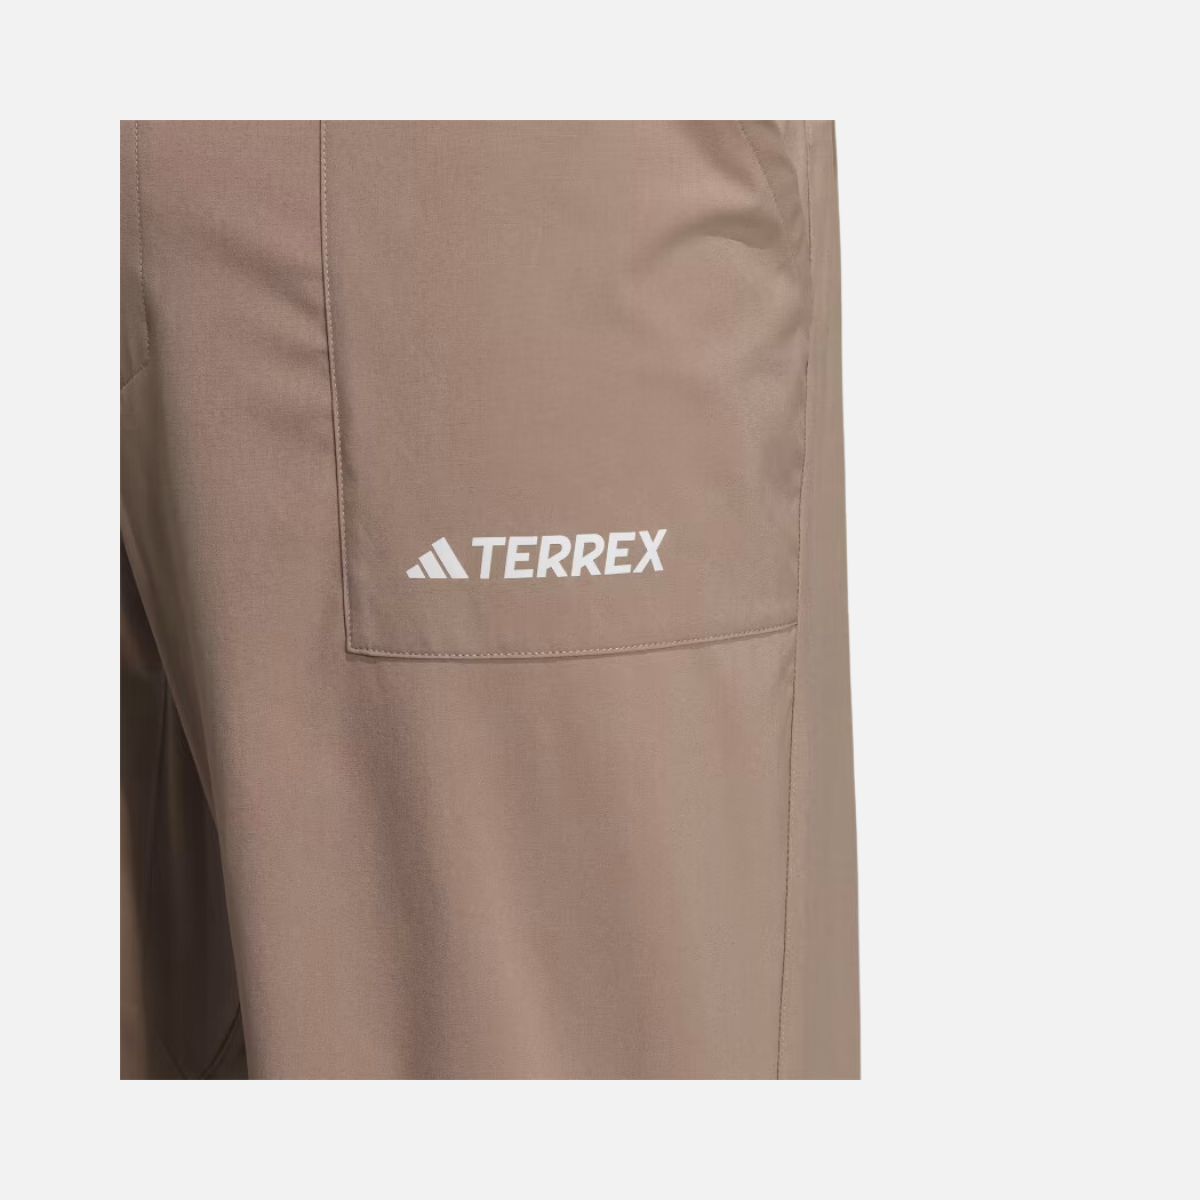 Adidas Terrex Men's Pant -Chalky Brown